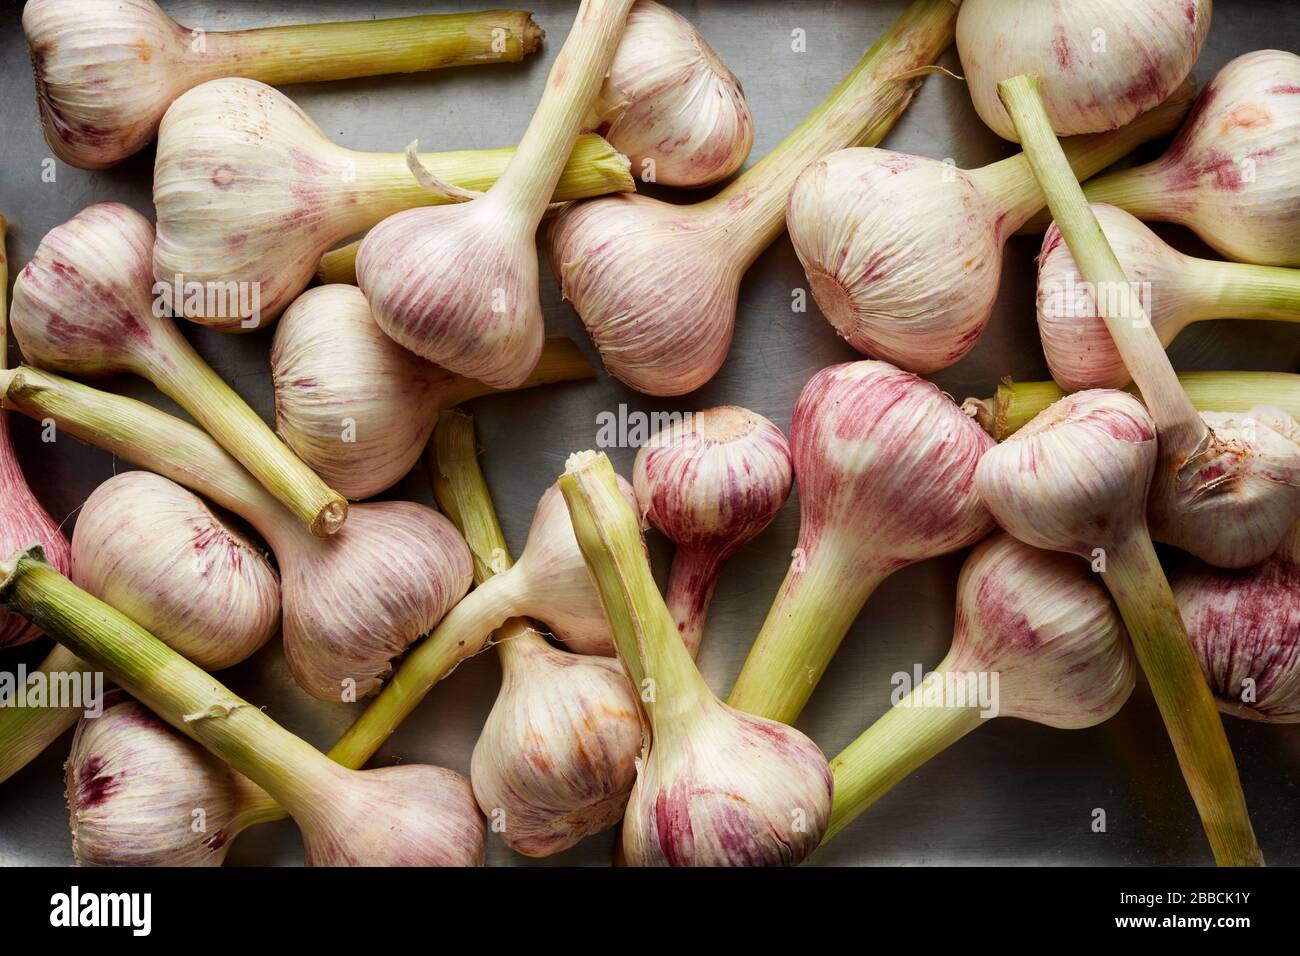 garlic bulbs group tray Garlic Allium Sativum bulbs cook ingredient Stock Photo